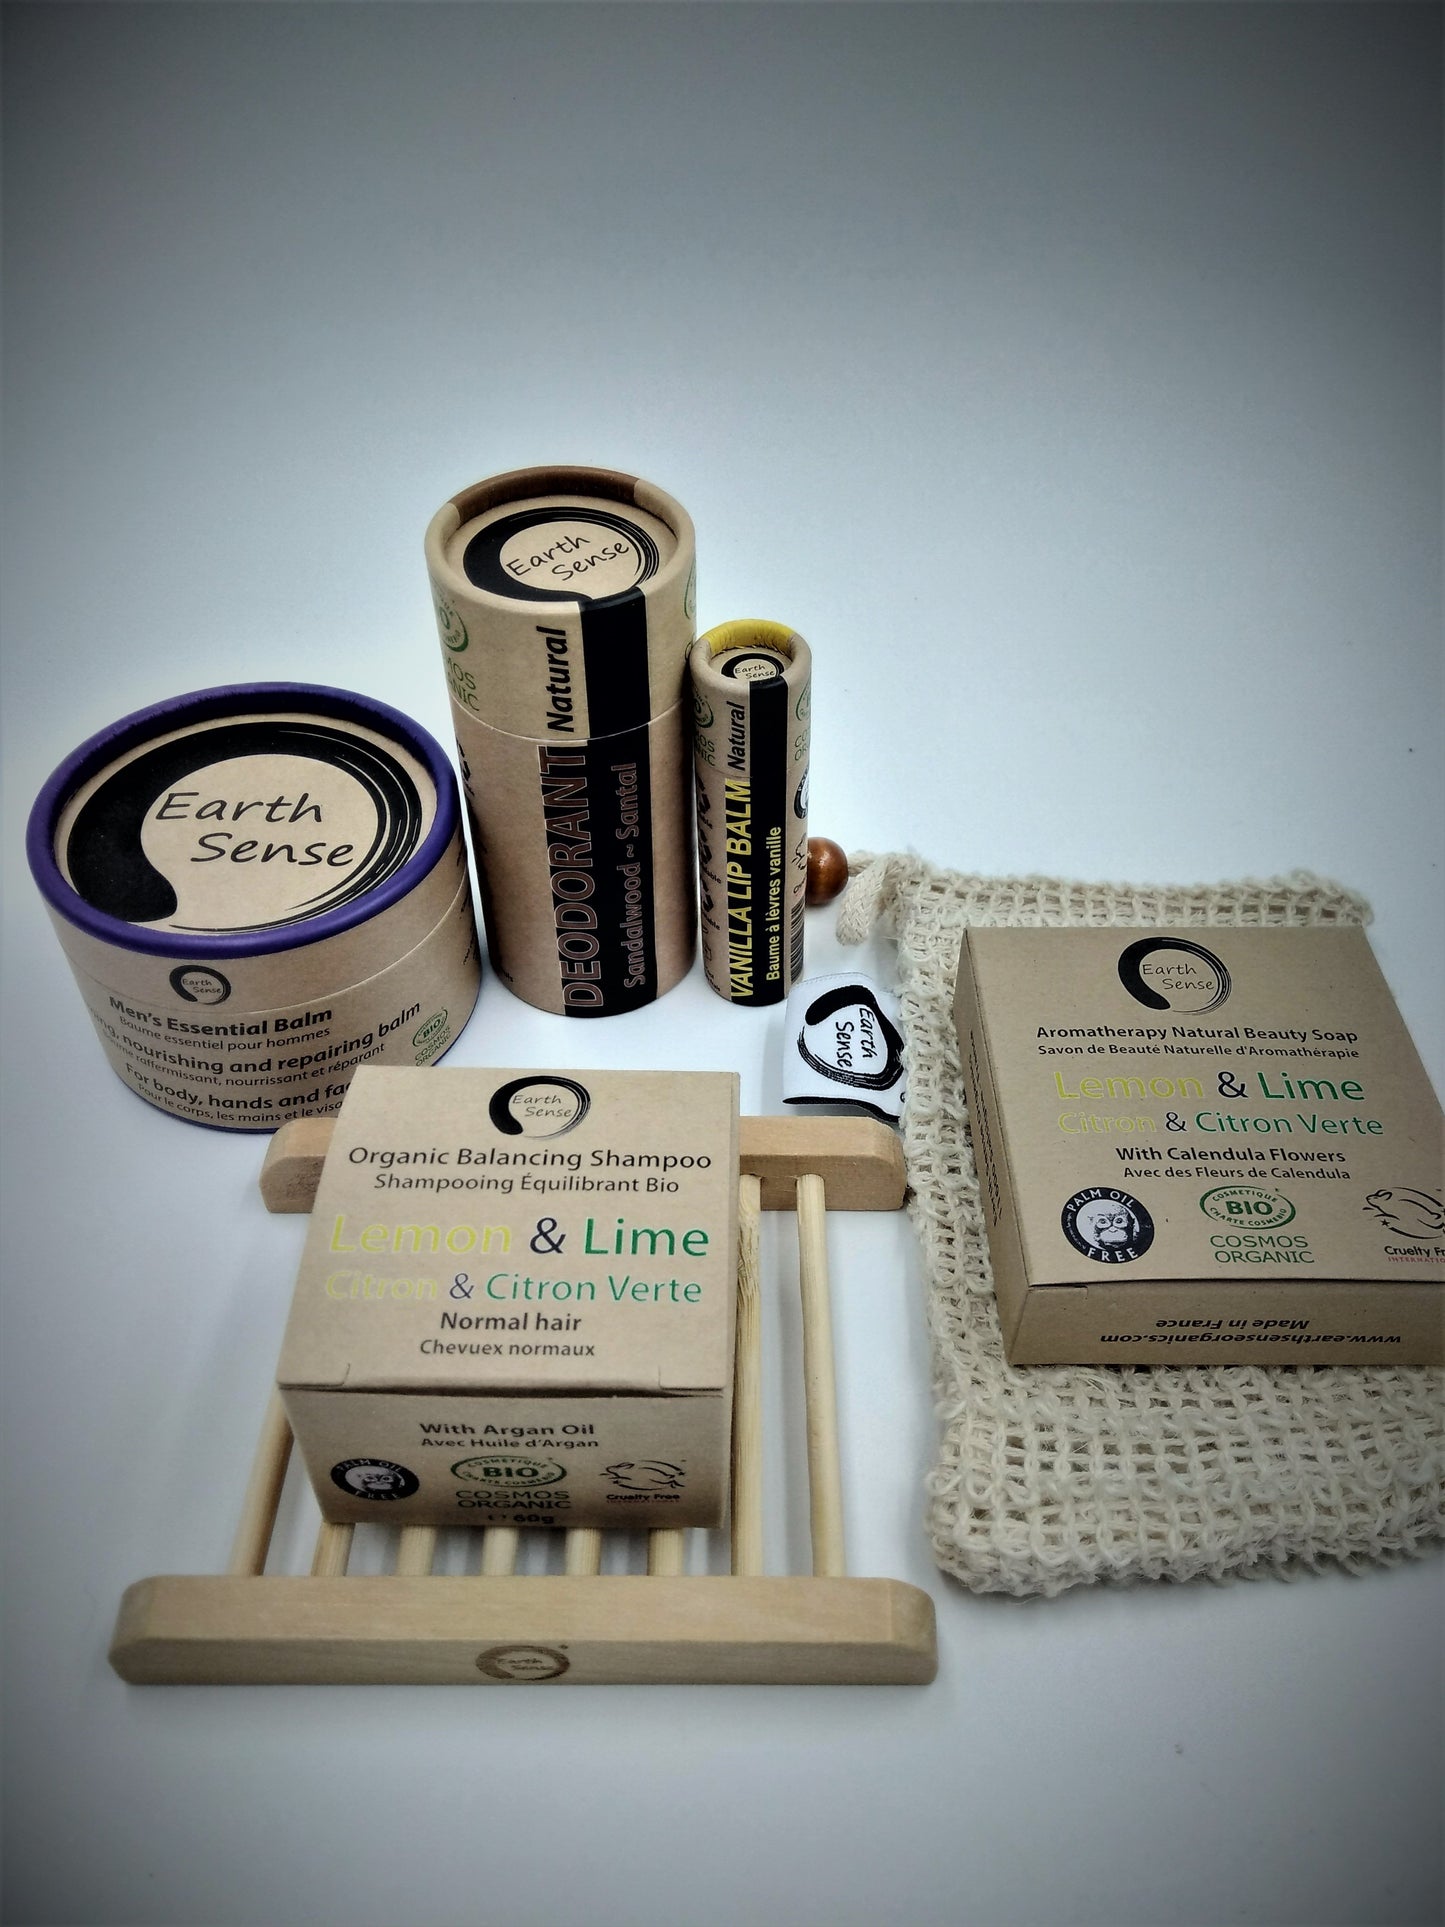 Organic Certified Balancing Solid Shampoo - Cedarwood - Oily & All Hair Types 60g - Earthsenseorganics